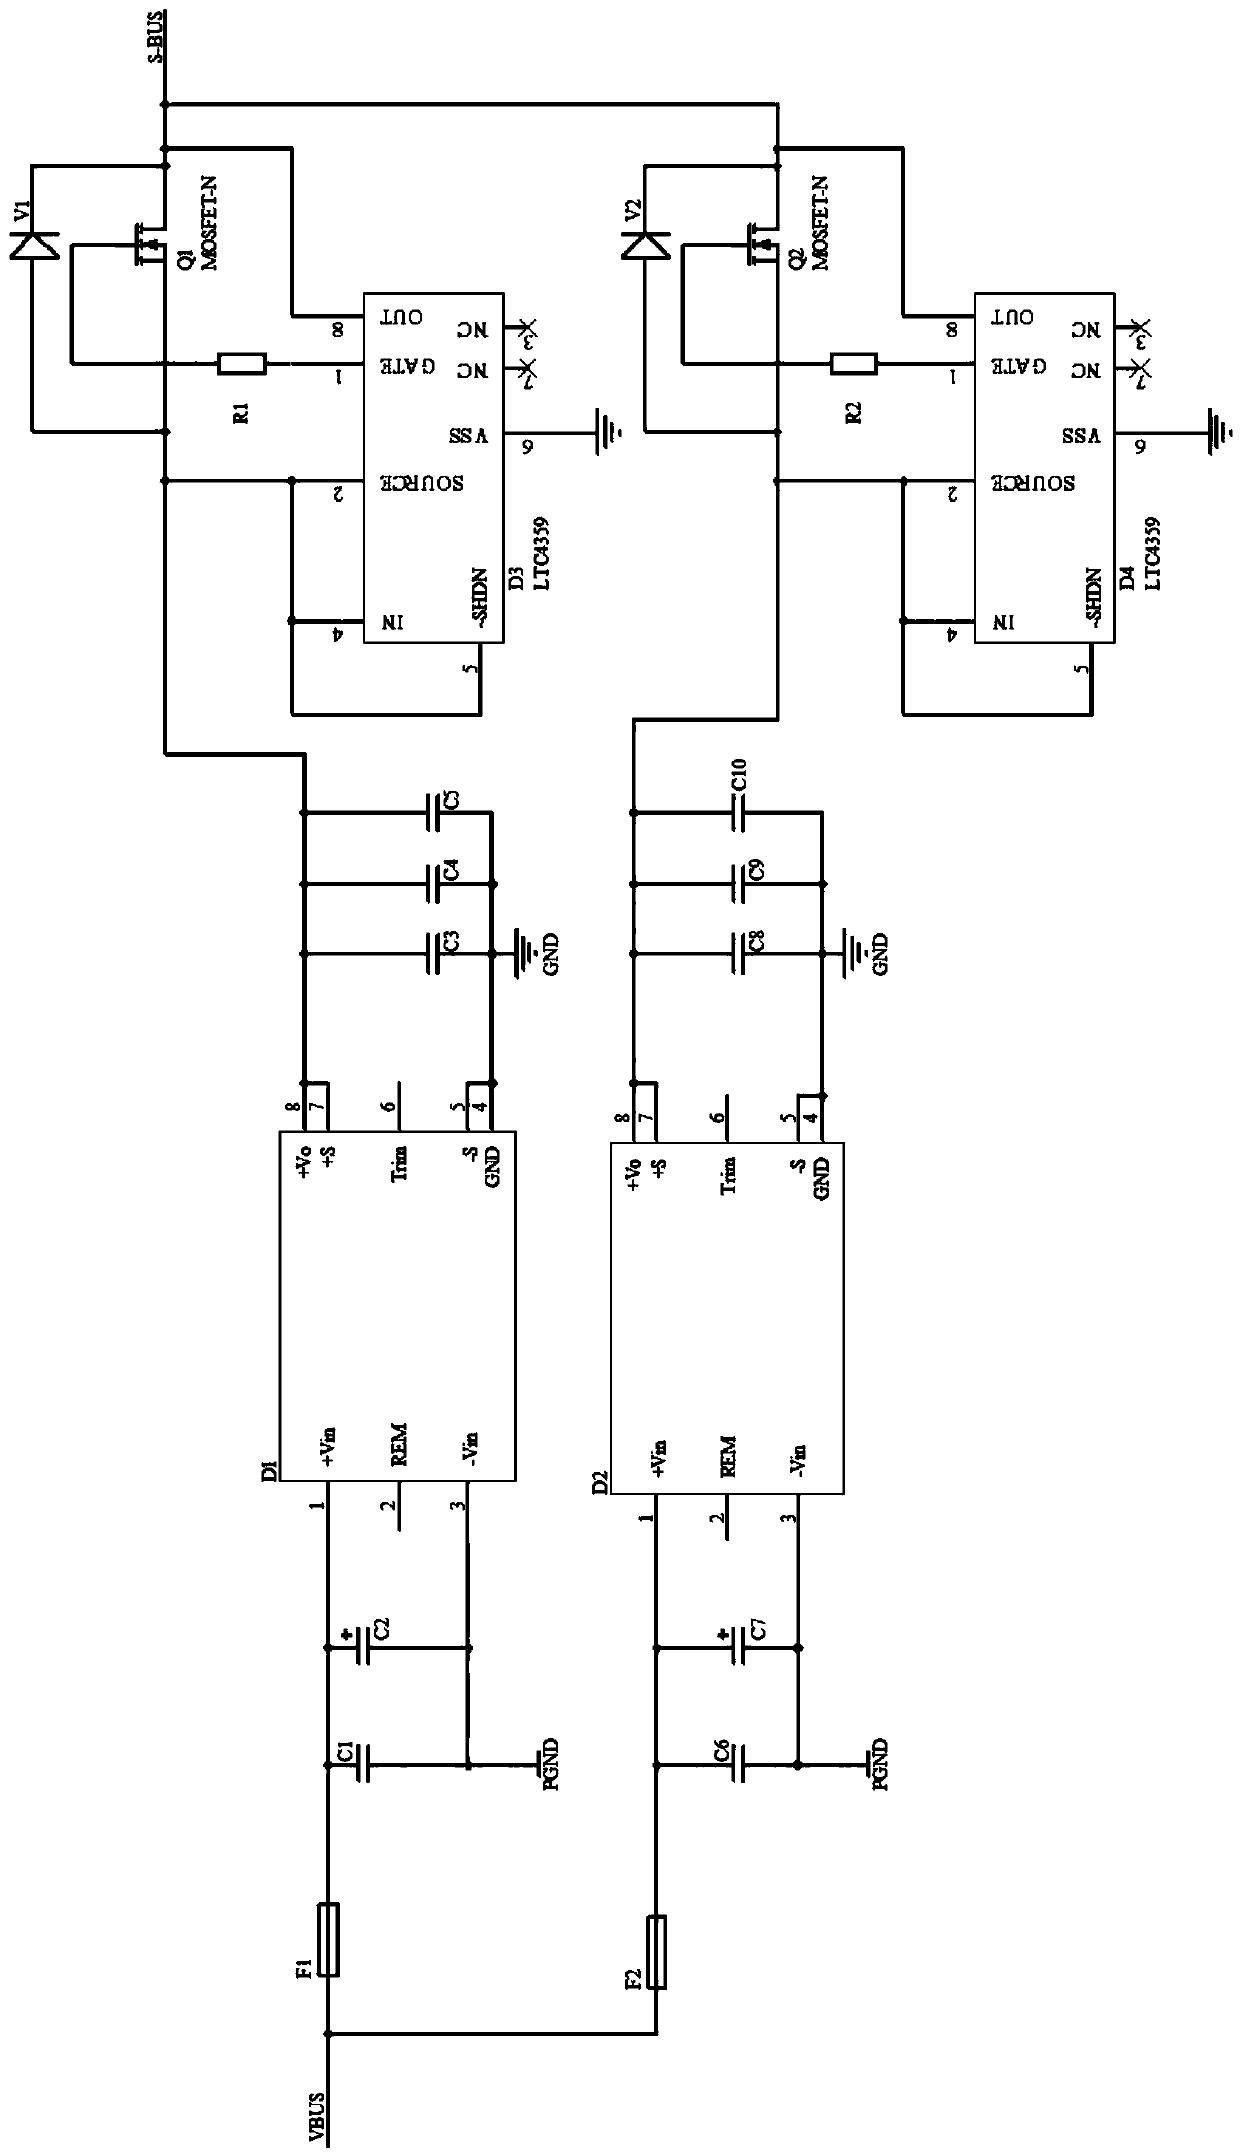 Satellite-borne DC-DC converter combiner output circuit with low transmission power consumption